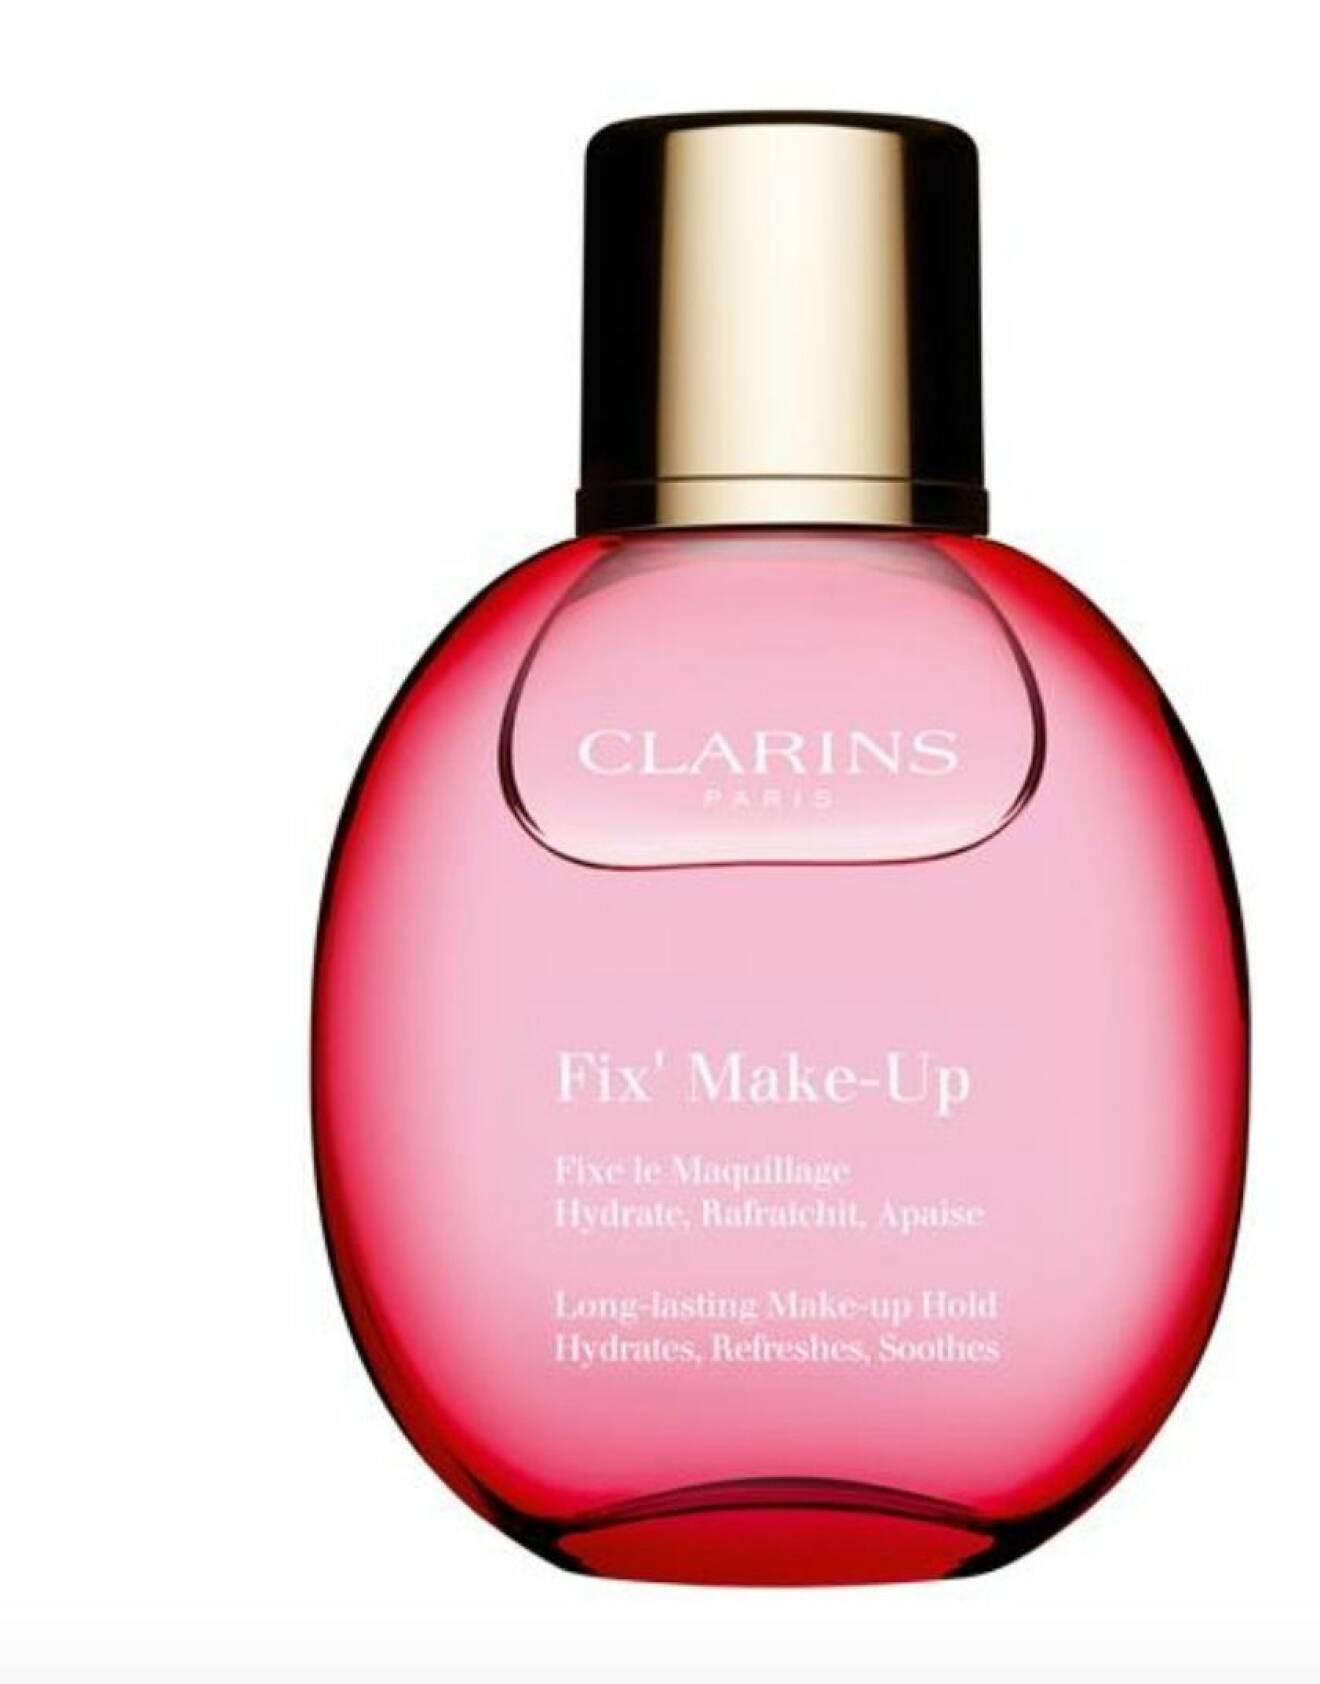 Fix´ Make-Up från Clarins